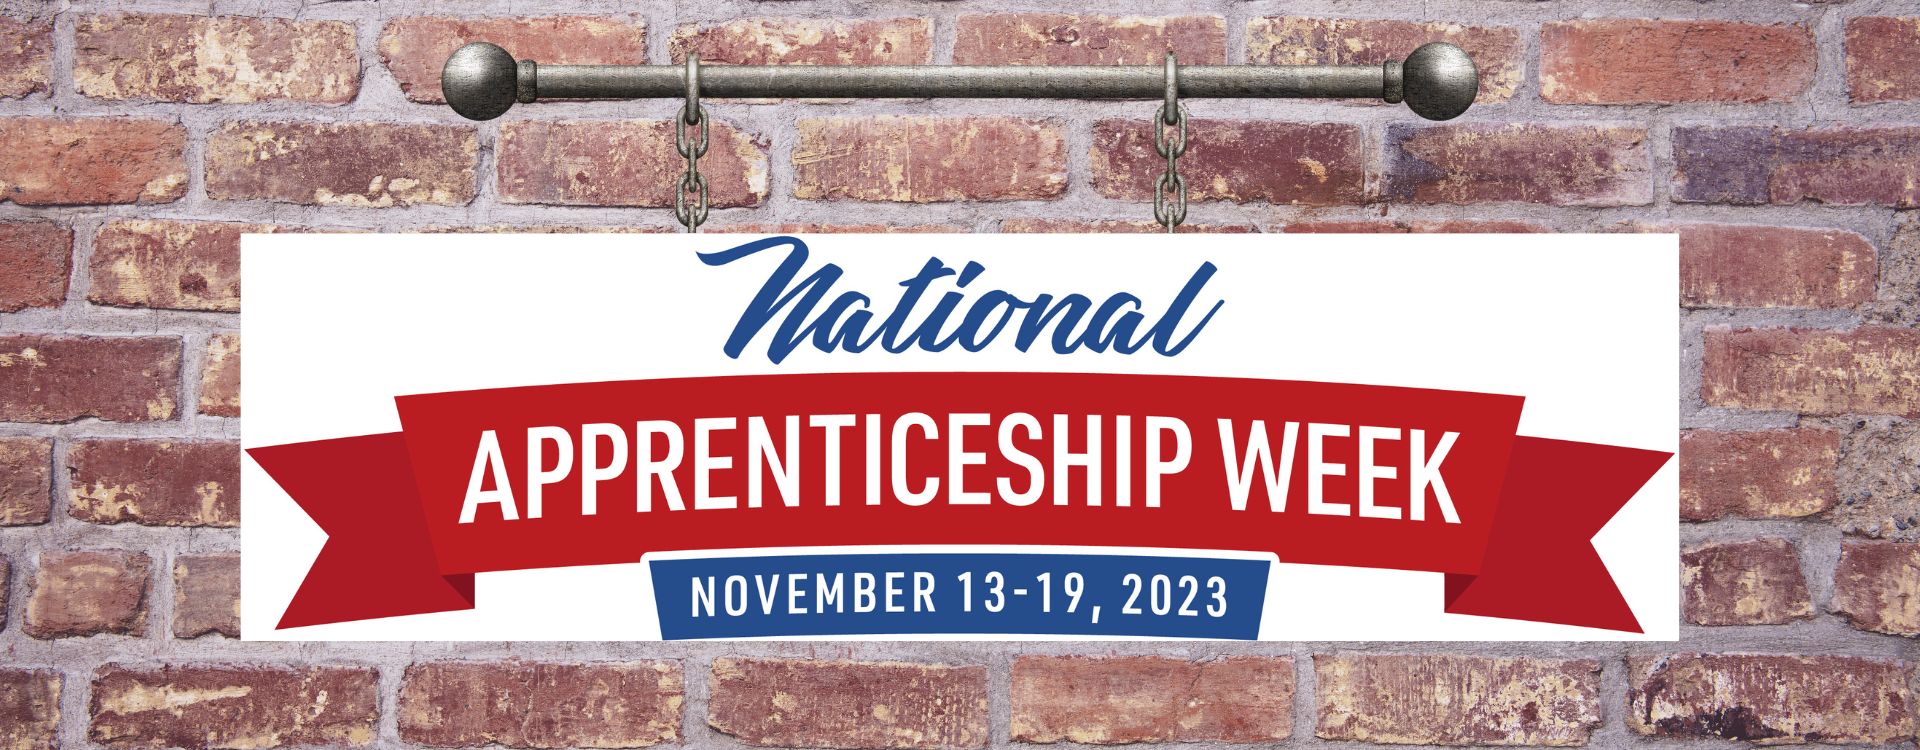 National Apprenticeship Week, Nov 13-19, 2023